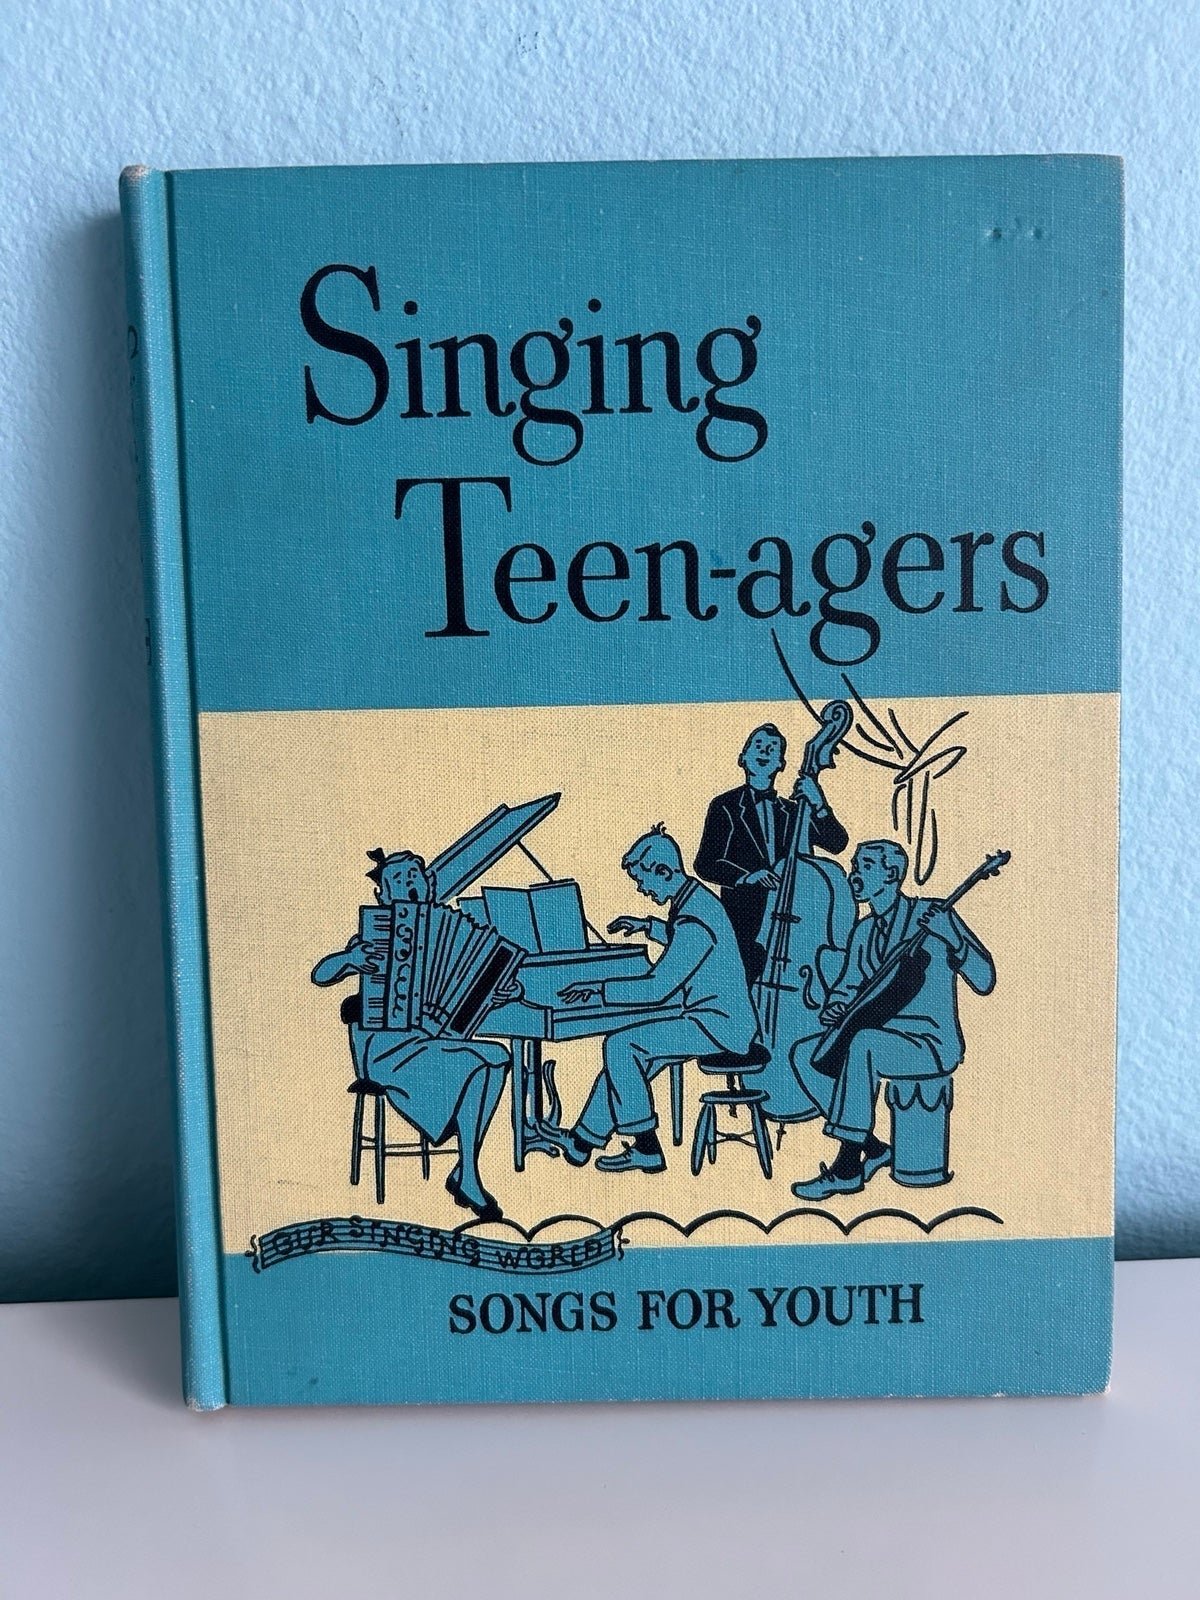 Vintage Music Book— Singing Teen-agers eHiHUQ7GX